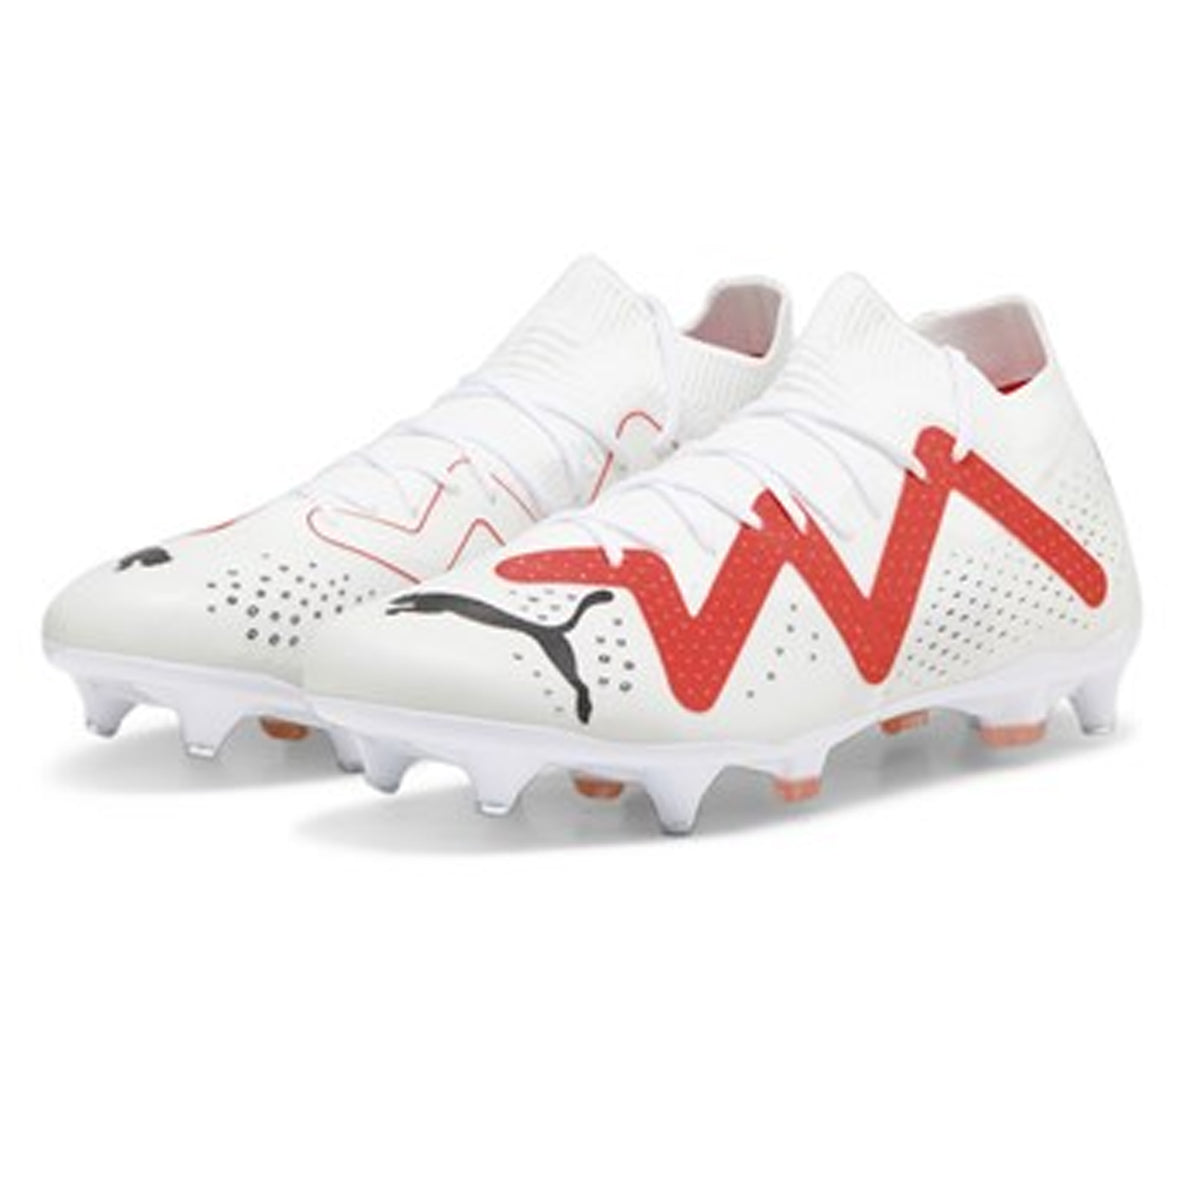 Puma Future Match MXSG Football Boots: White/Fire Orchid